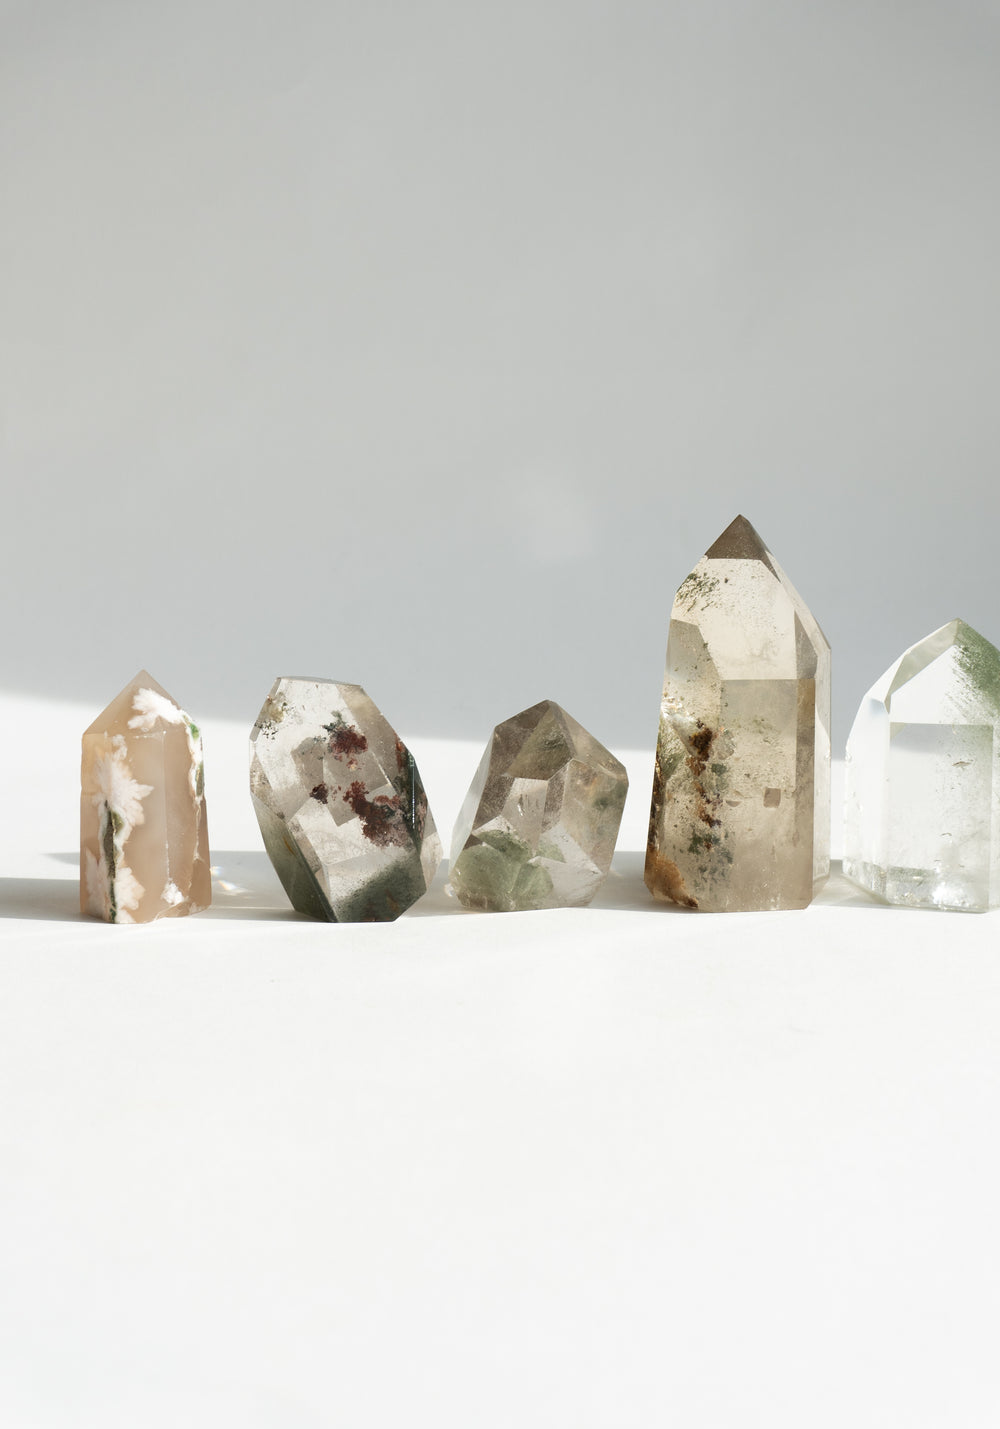 Faceted Lodolite Crystals